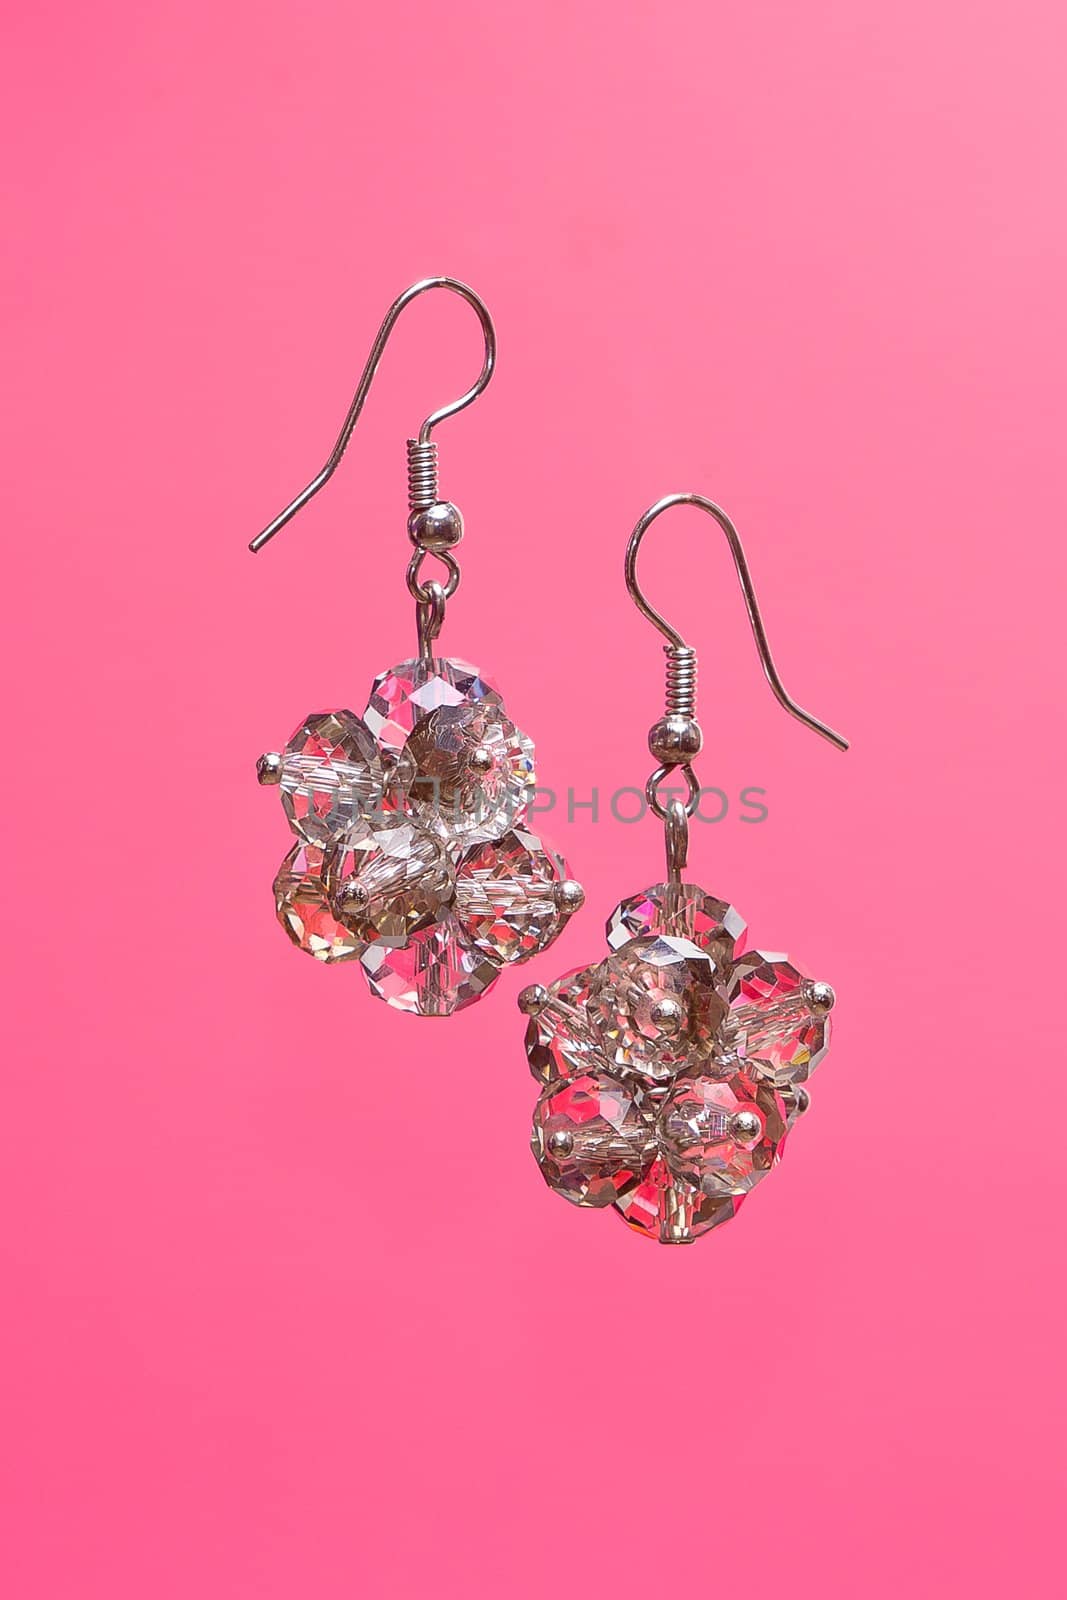 Shining elegant modern earrings with zircons on pink background